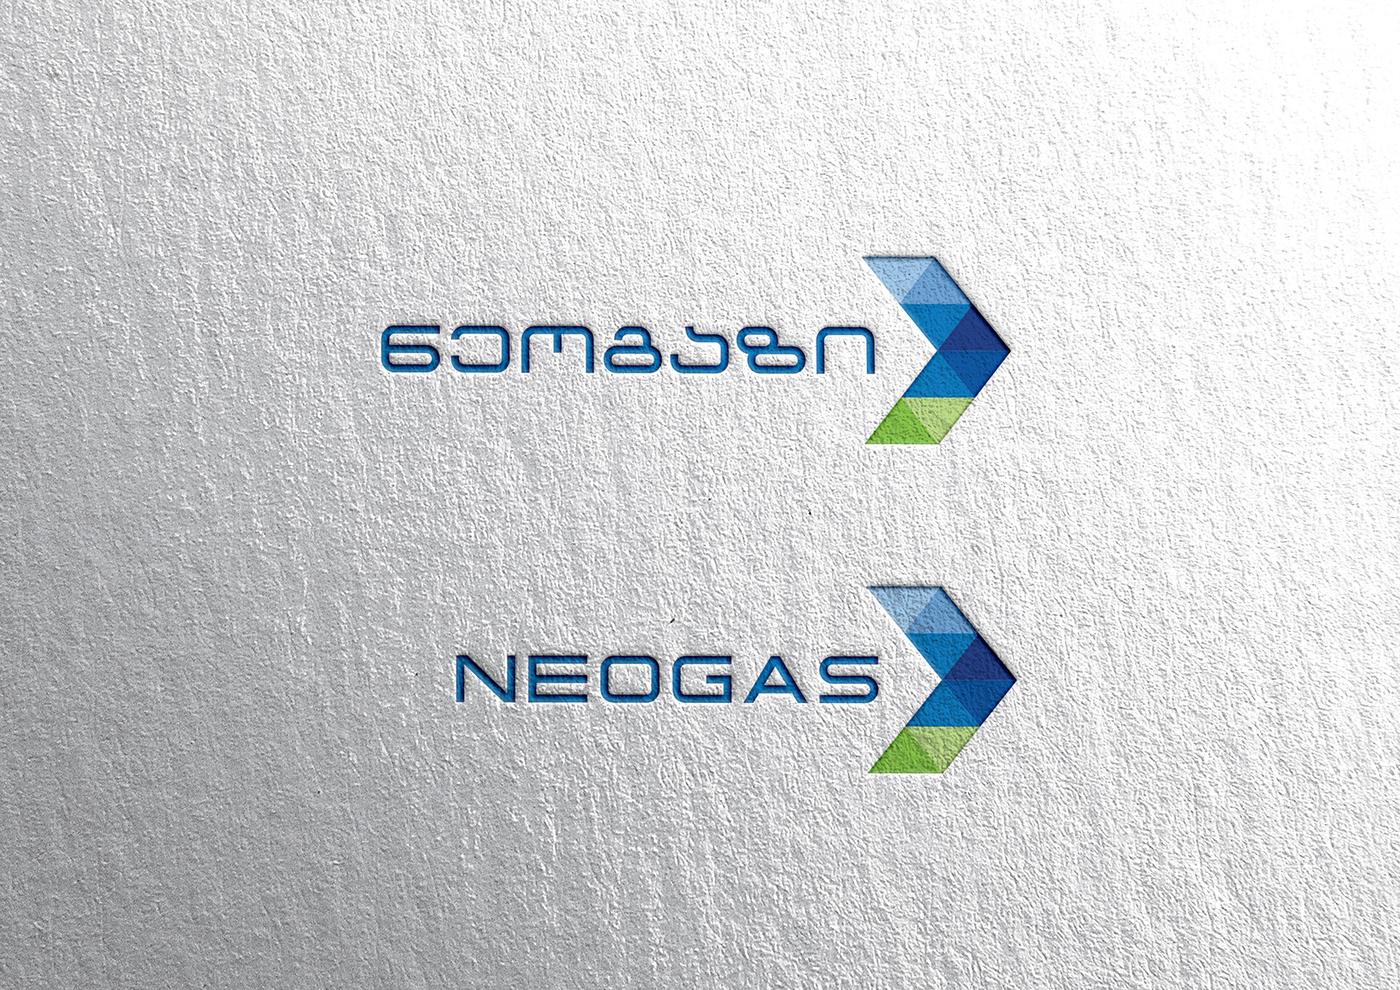 branding.ge Maka chichinadze Neogas gas station logo corporate style ნეოგაზი